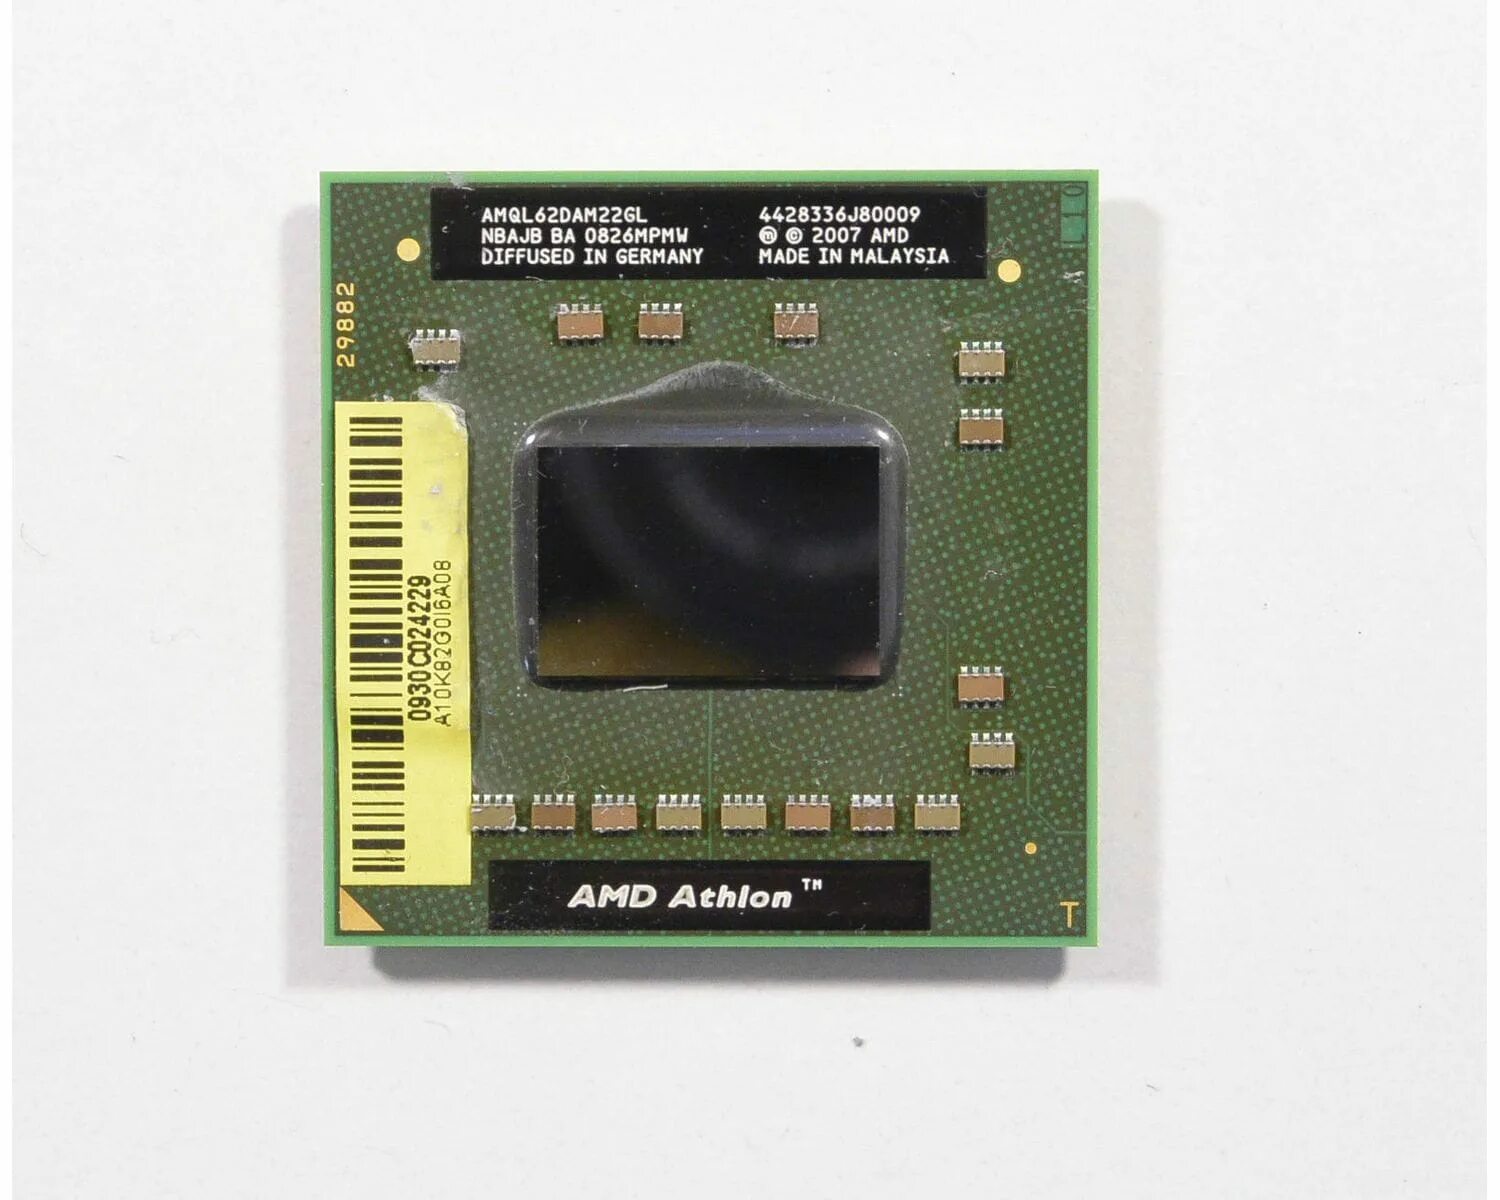 64 процессор купить. AMD Athlon x2 QL-62. AMD Athlon amql60dam22gg. AMD Athlon 64 x2. Процессор Атлон 64 х2.